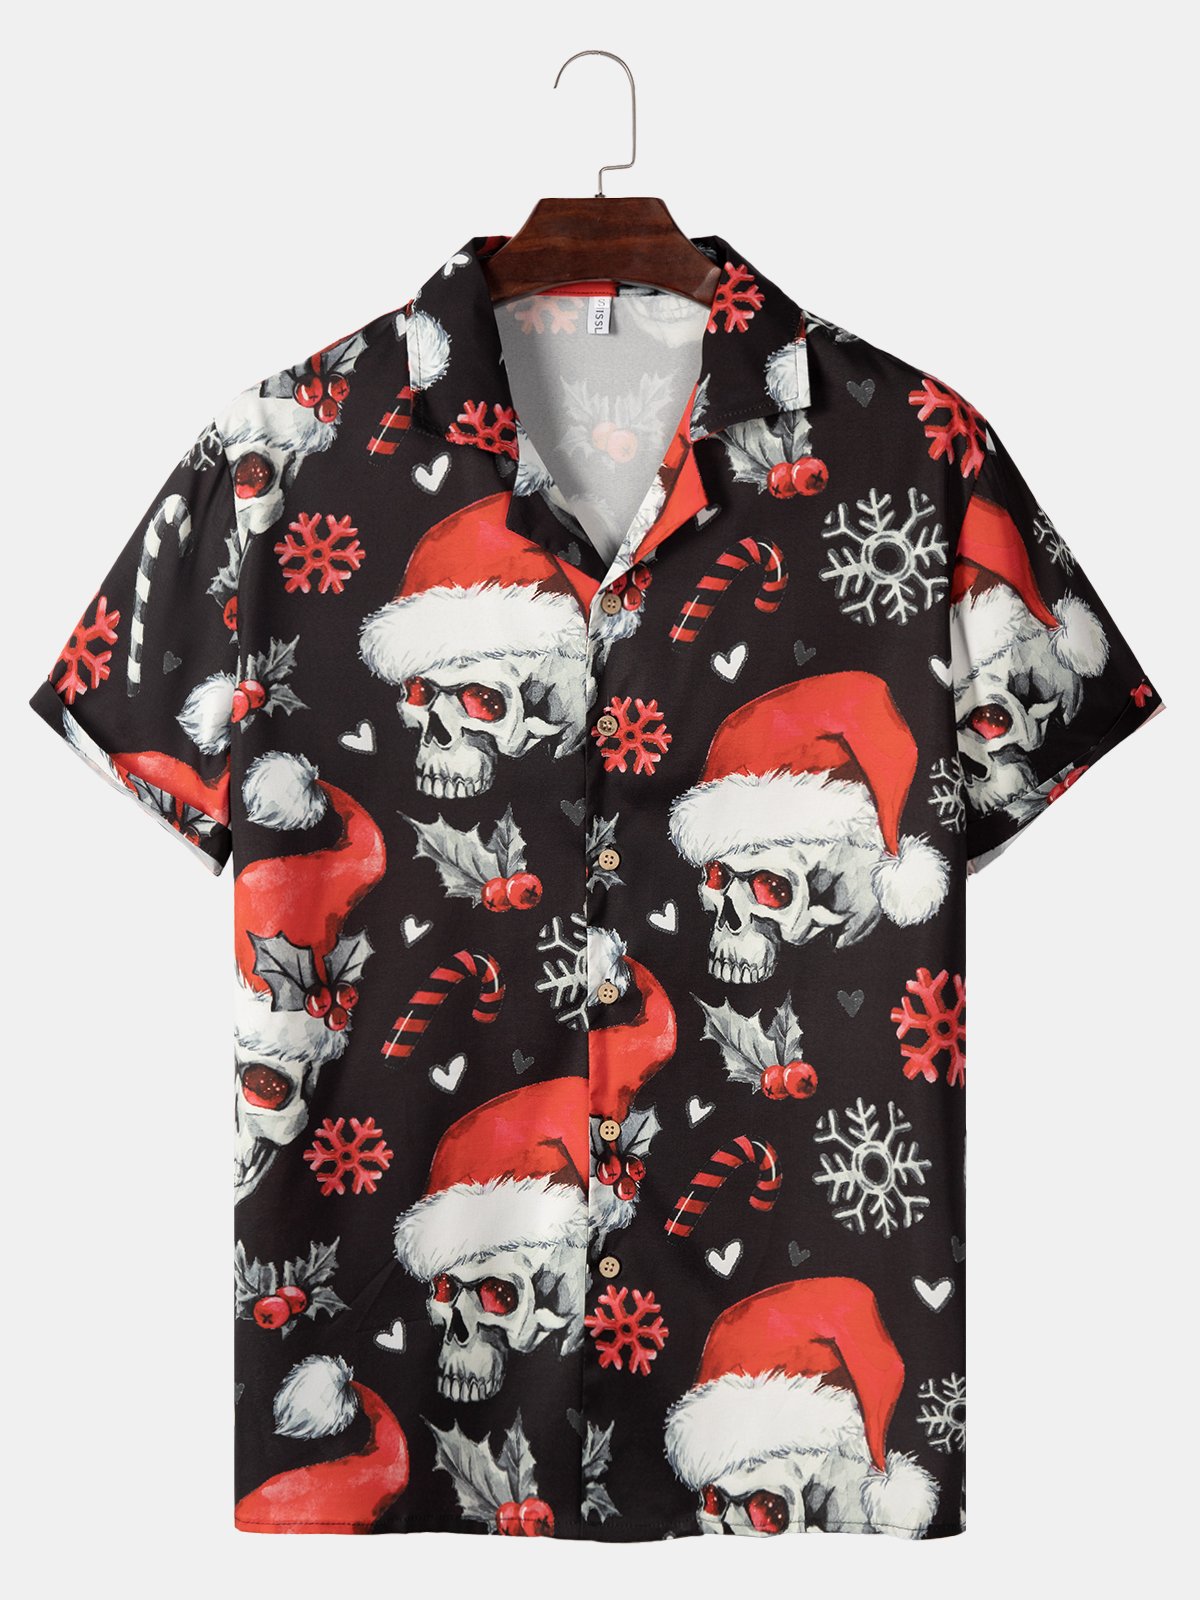 Men's Christmas Shirts Skull Printed Funny Short Sleeve Tops